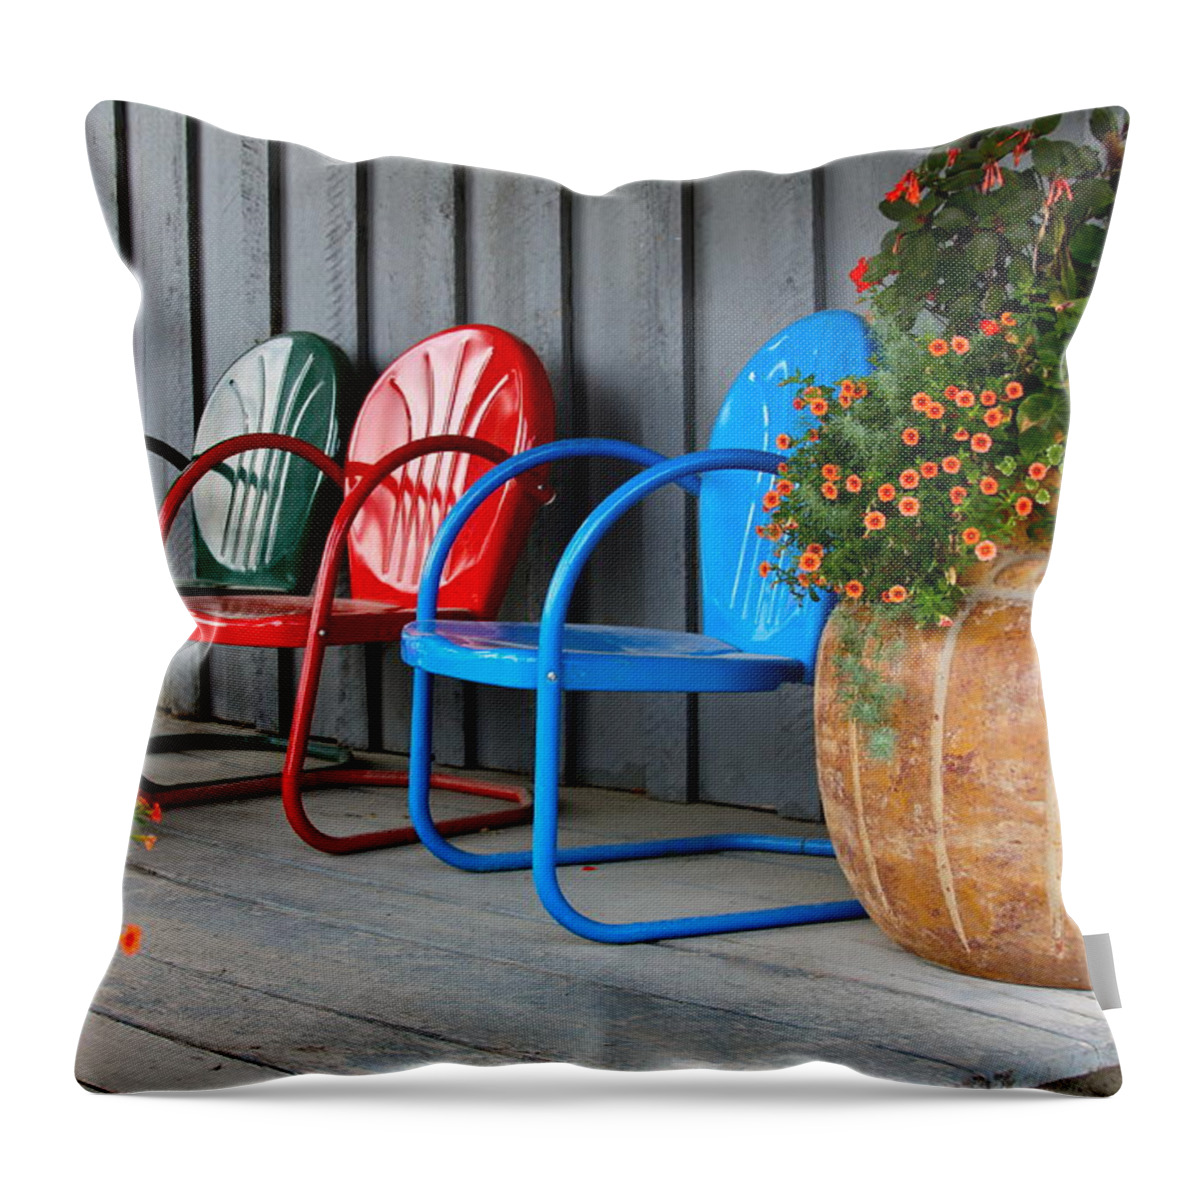 Chair Throw Pillow featuring the photograph Outdoor Living by Karon Melillo DeVega